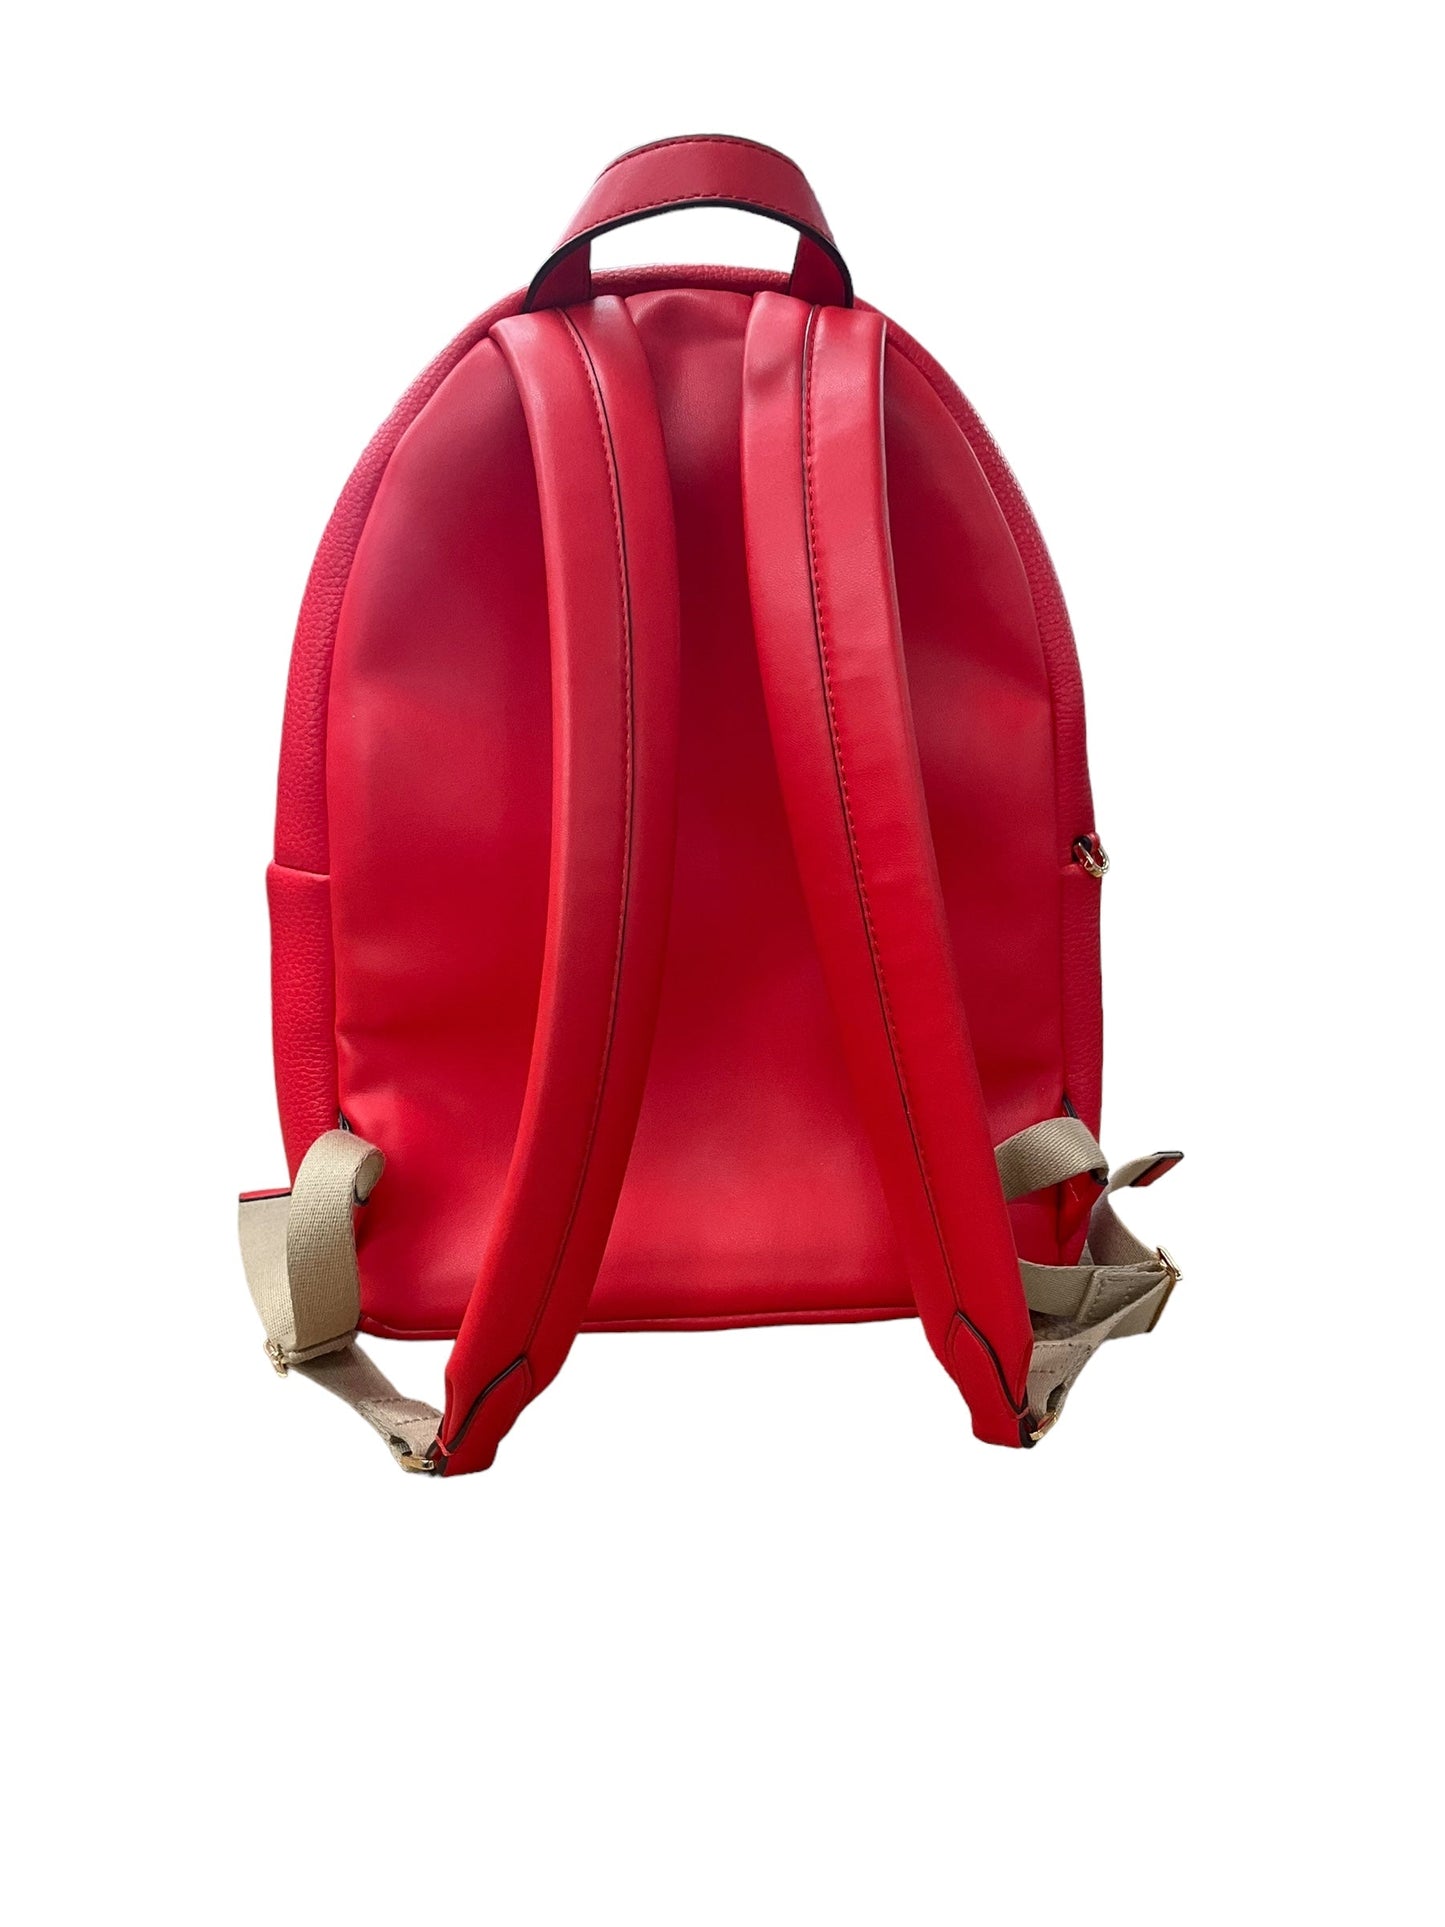 Backpack Leather Michael Kors, Size Medium